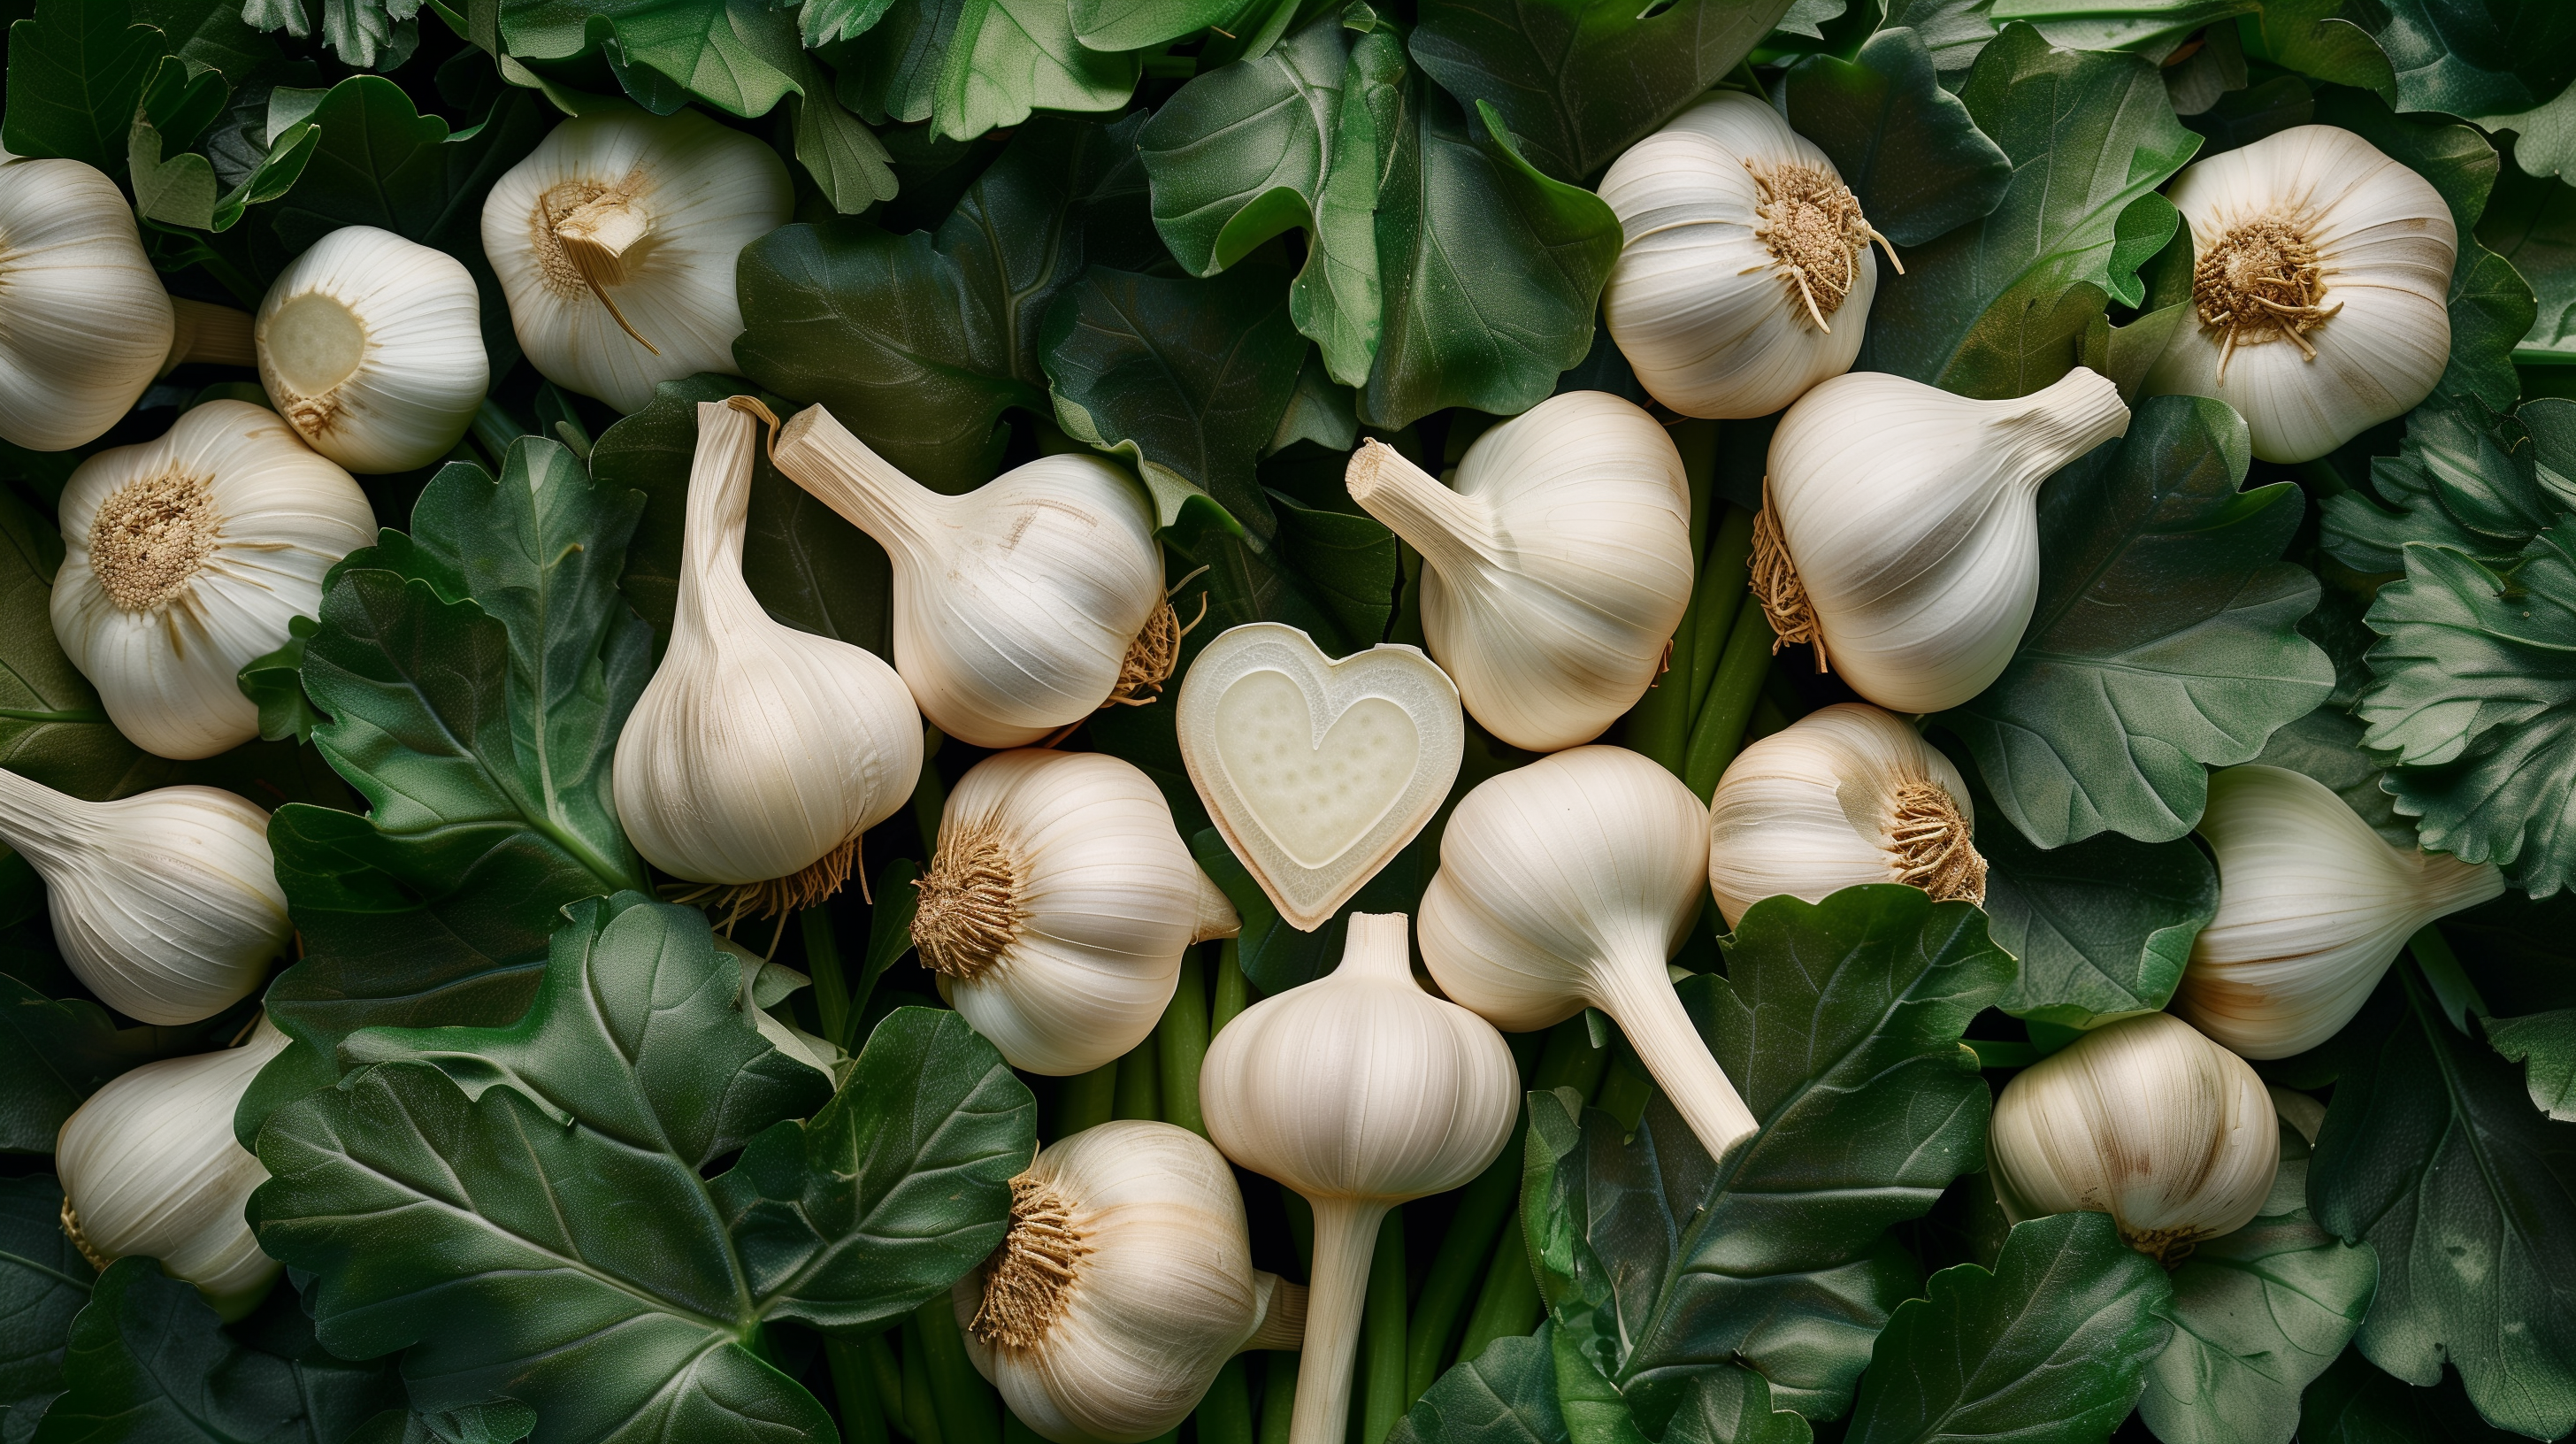 fresh garlic bulbs against a backdrop of green herbal leaves